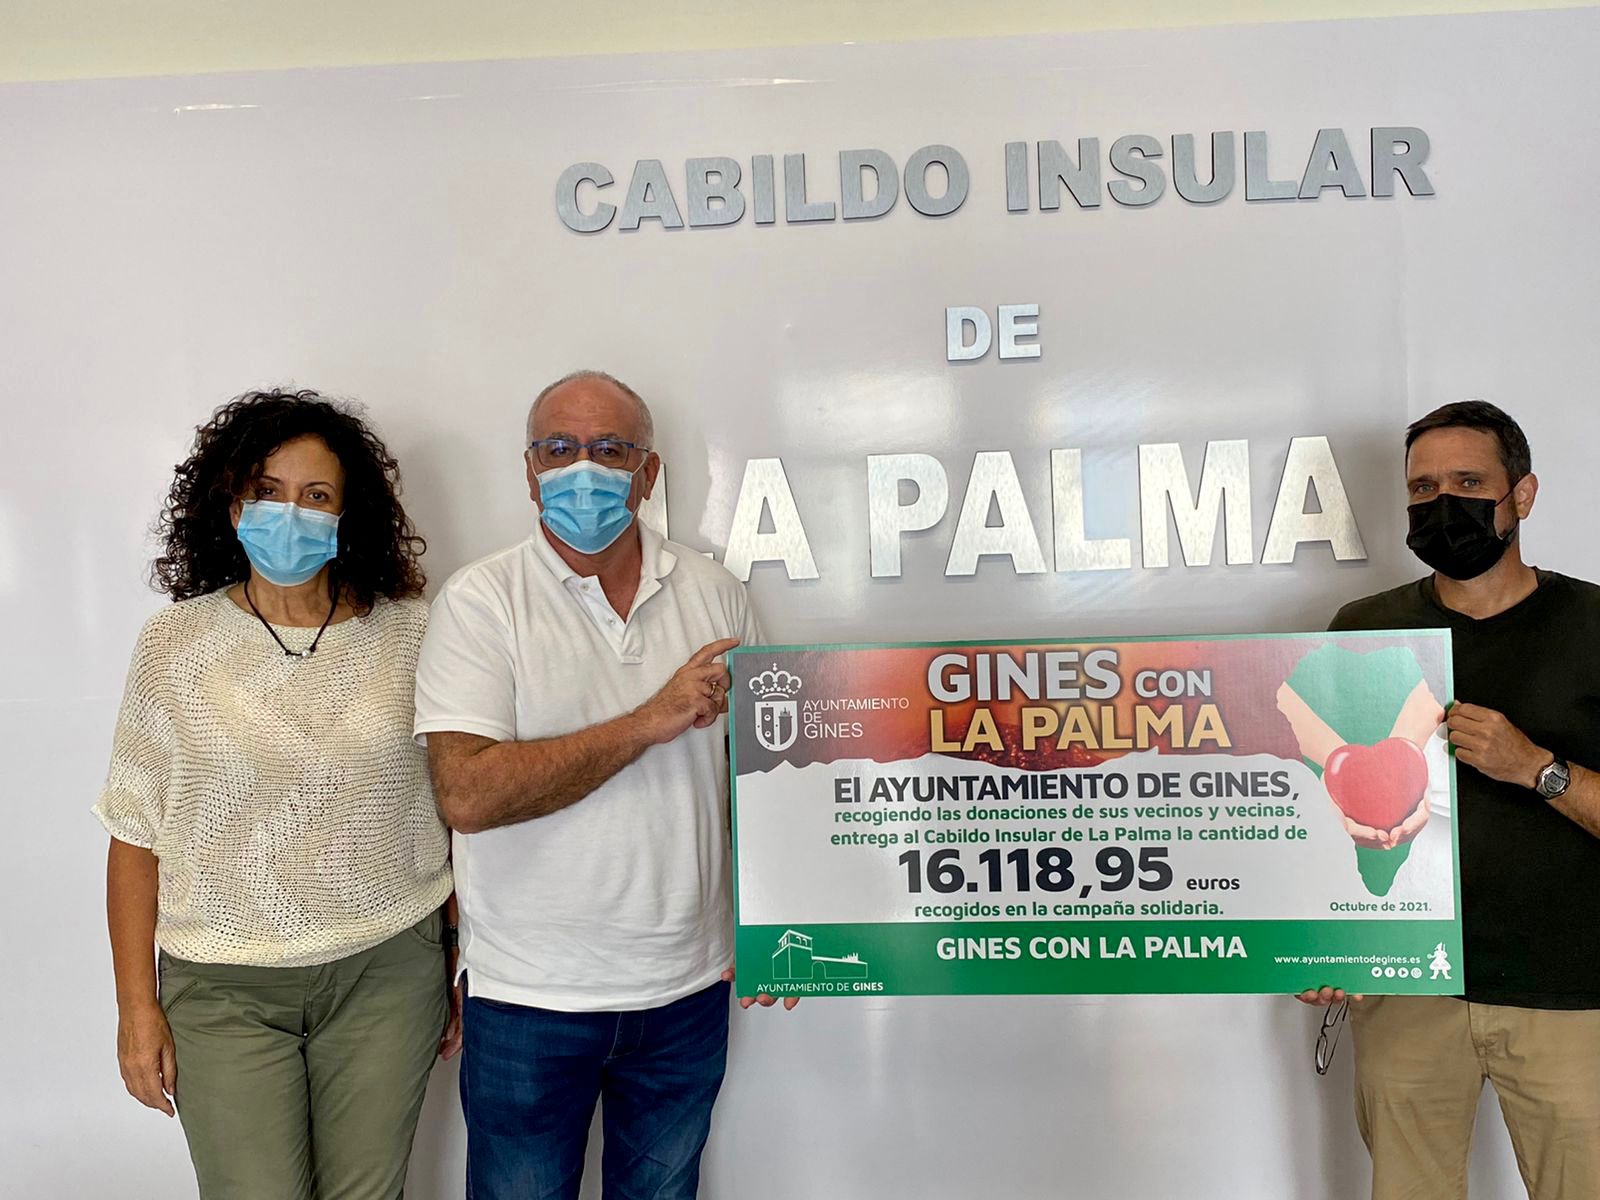 Gines entrega más de 16.000 euros al Cabildo Insular de La Palma